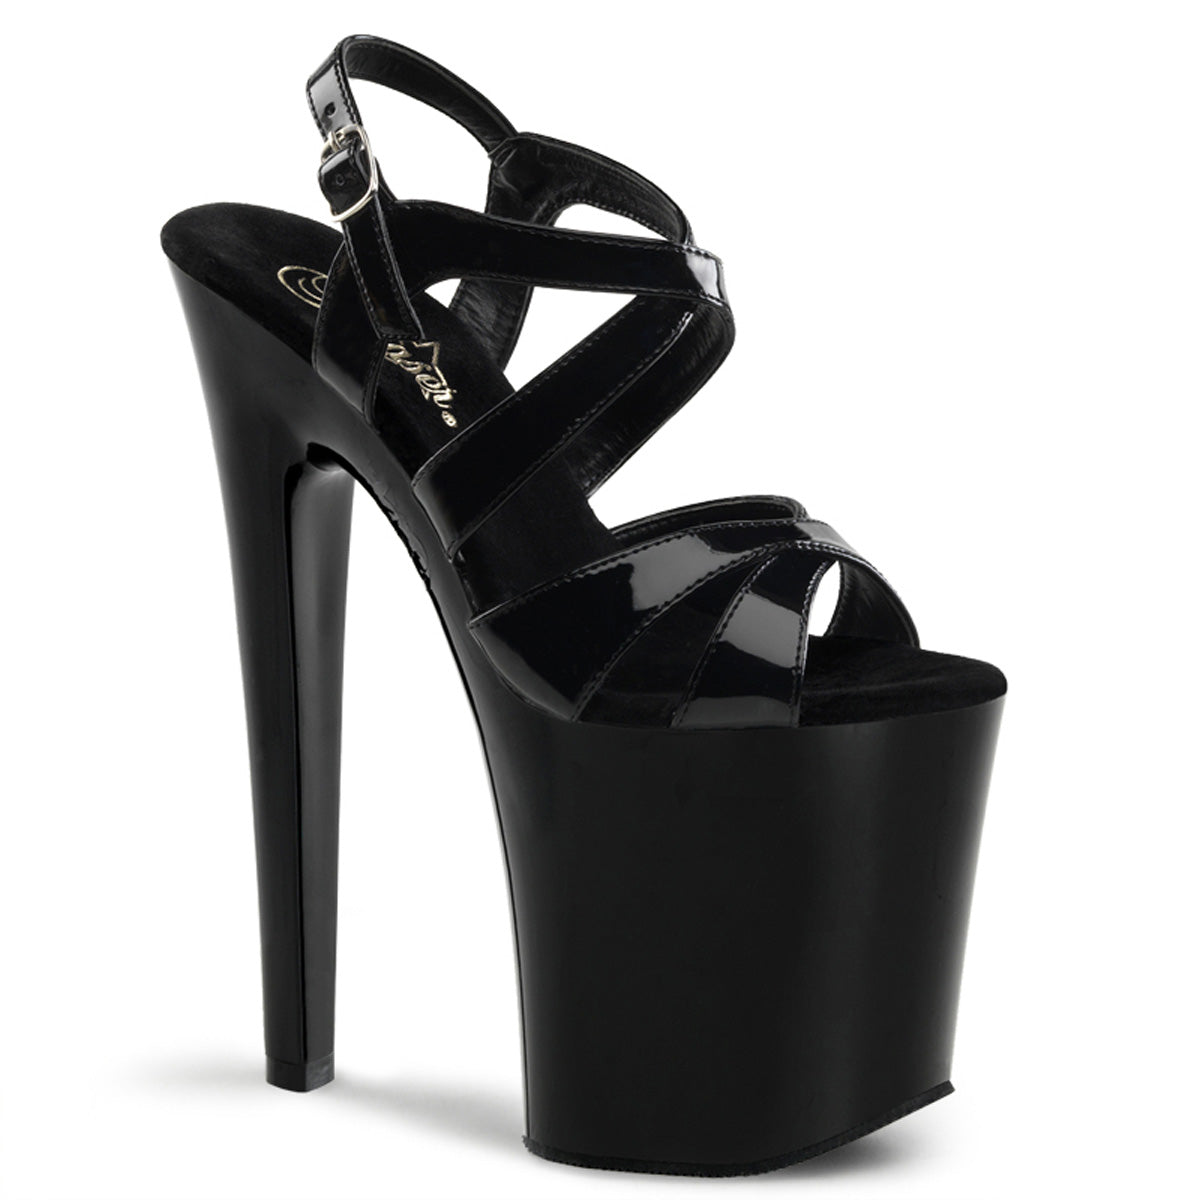 XTREME-872 8" Heel Black Patent Pole Dancing Platforms Shoes-Pleaser- Sexy Shoes